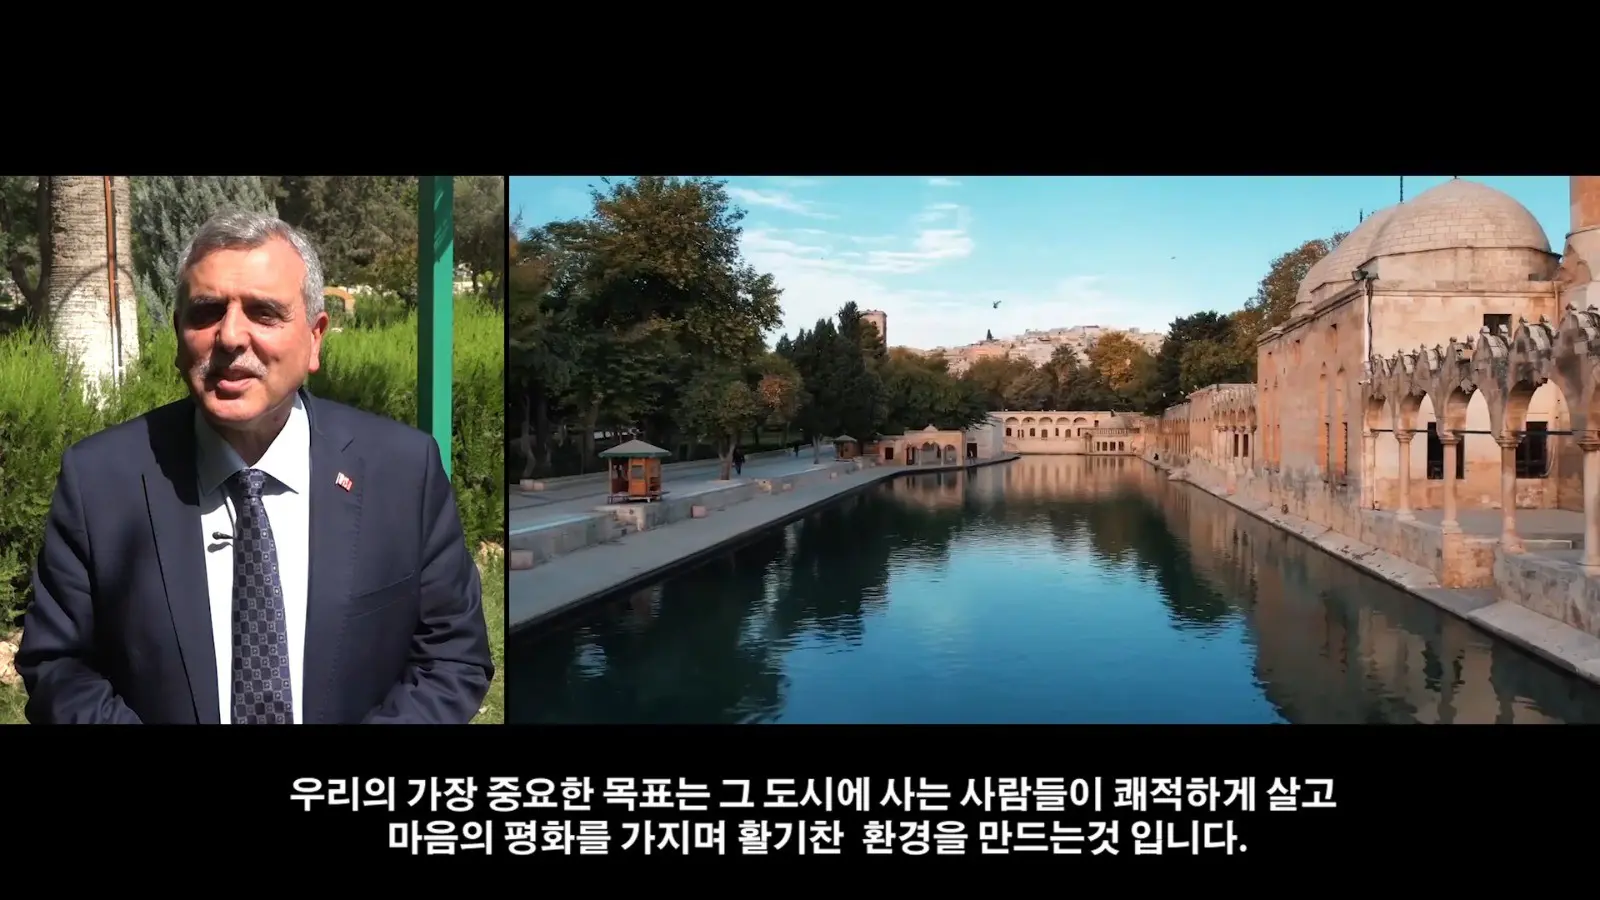 ''ENVIRONMENTAL LEADER AWARD'' TO MAYOR BEYAZGÜL FROM SOUTH KOREA ASSEMBLY